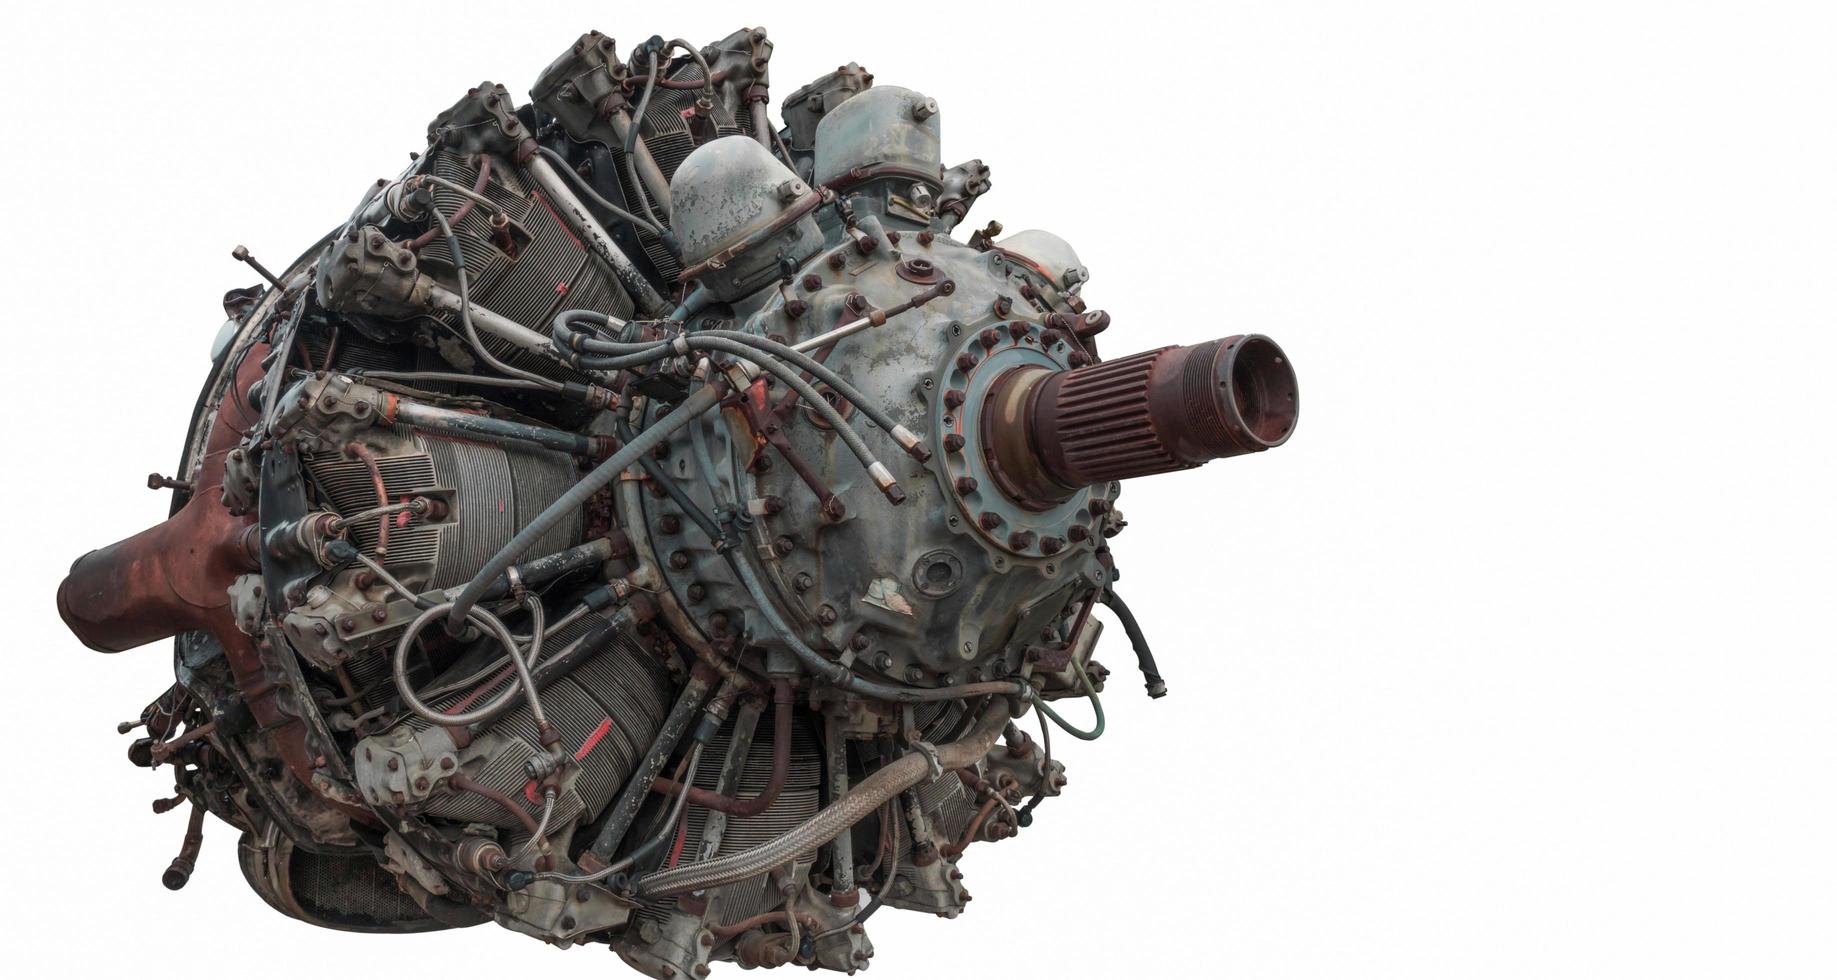 Motor radial de 9 cilindros de avião antigo, estilo vintage foto